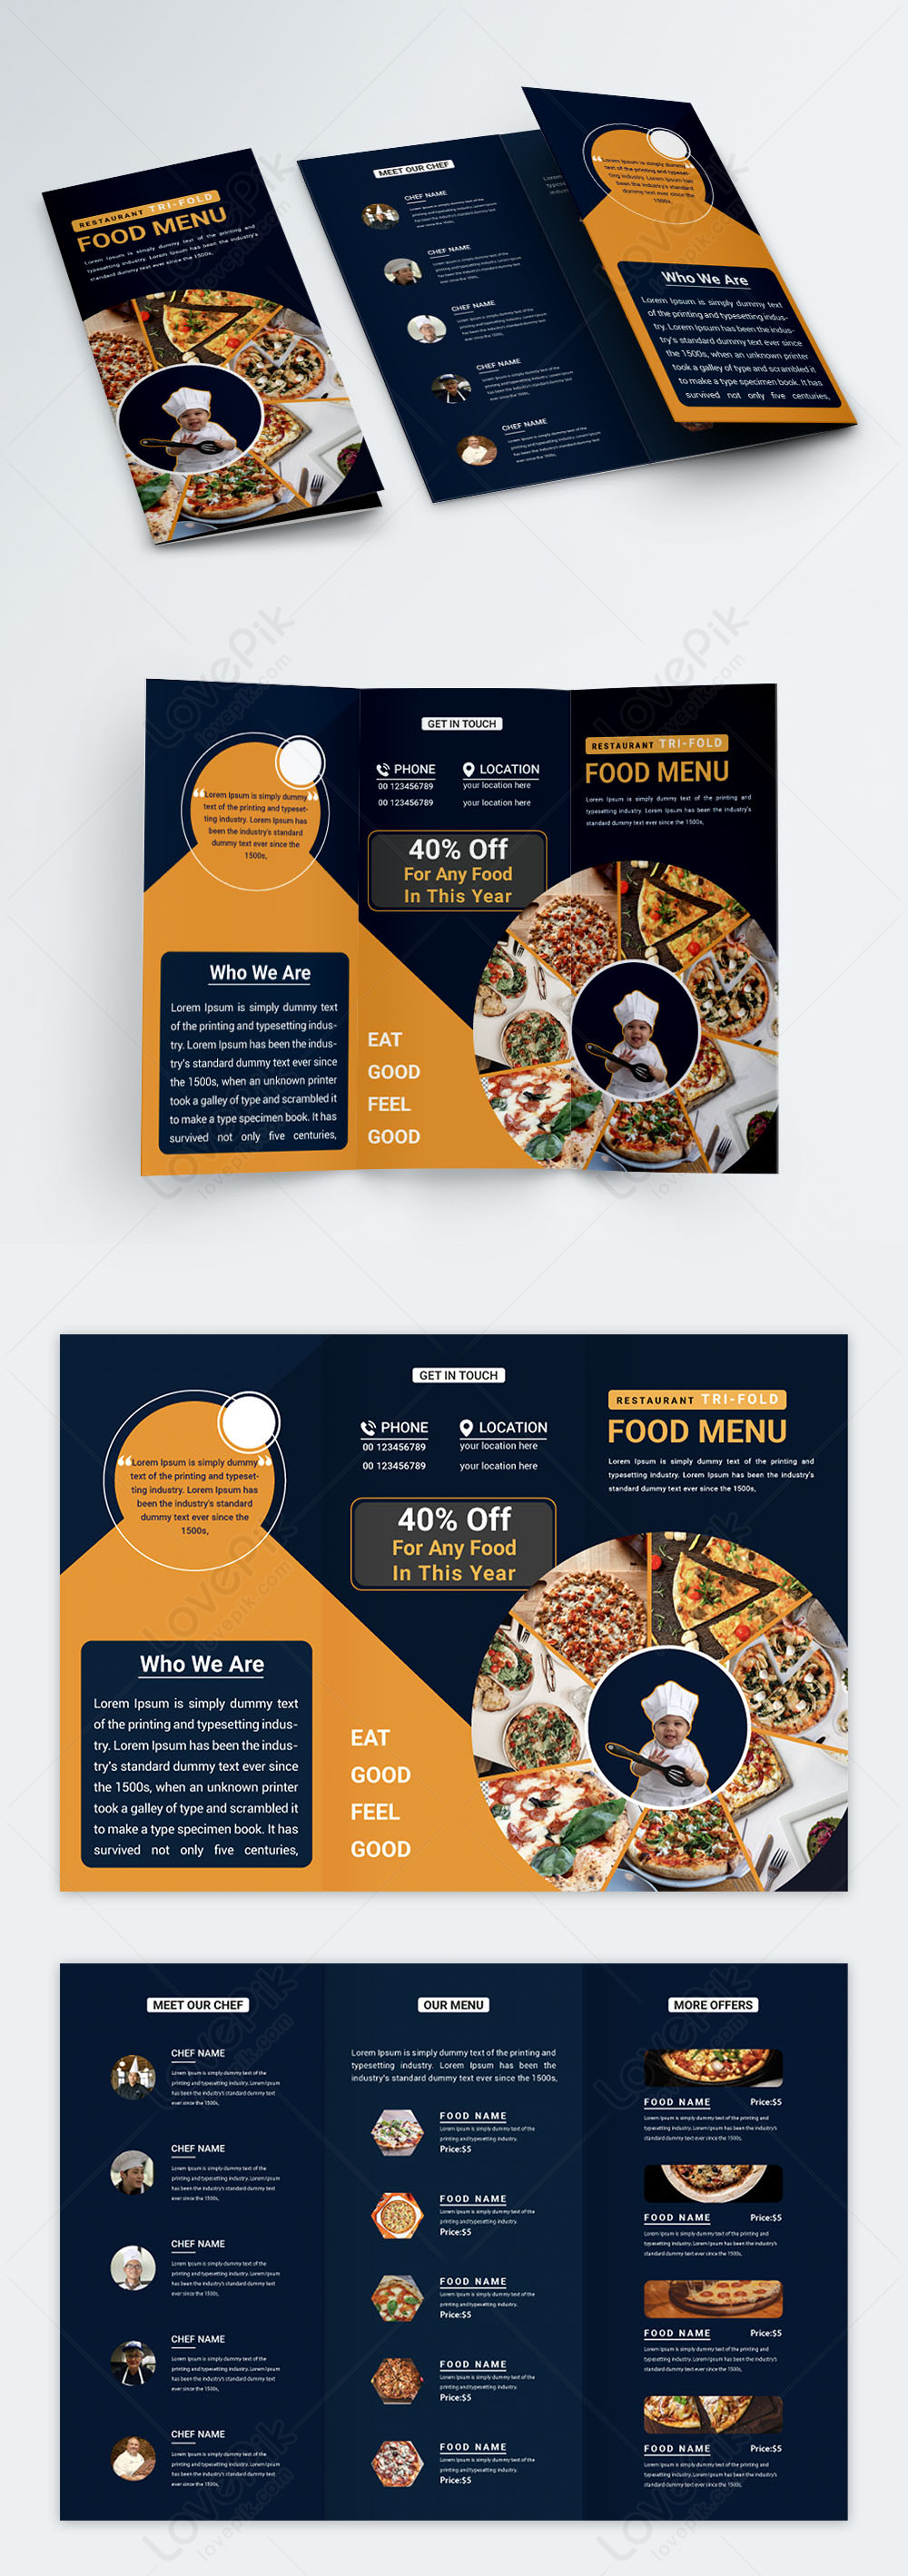 restaurant-food-menu-tri-fold-brochure-template-image-picture-free